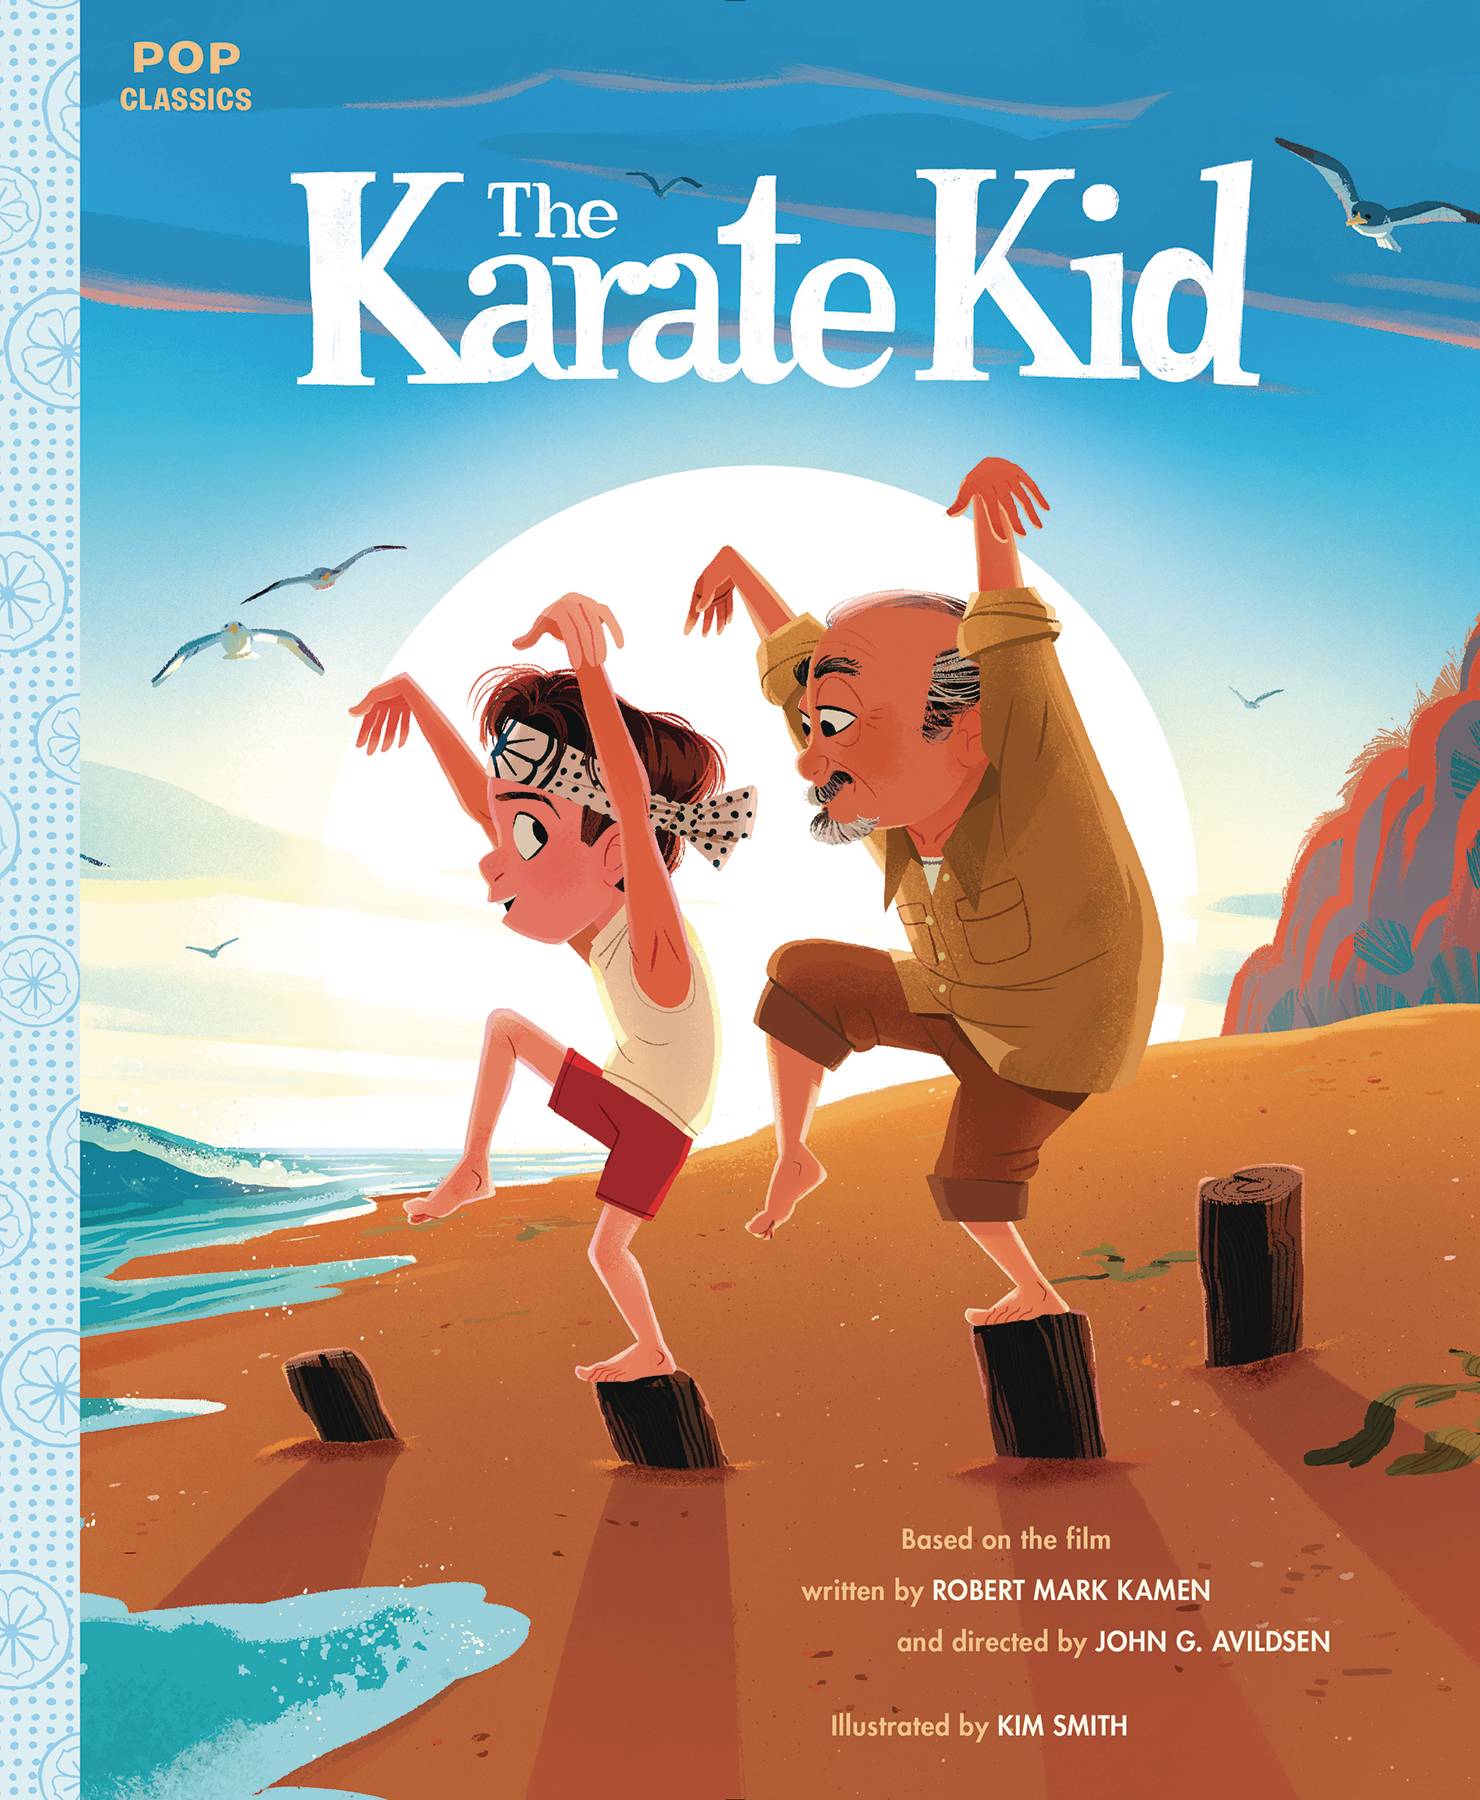 Karate Kid Pop Classic Illustrated Storybook Hardcover